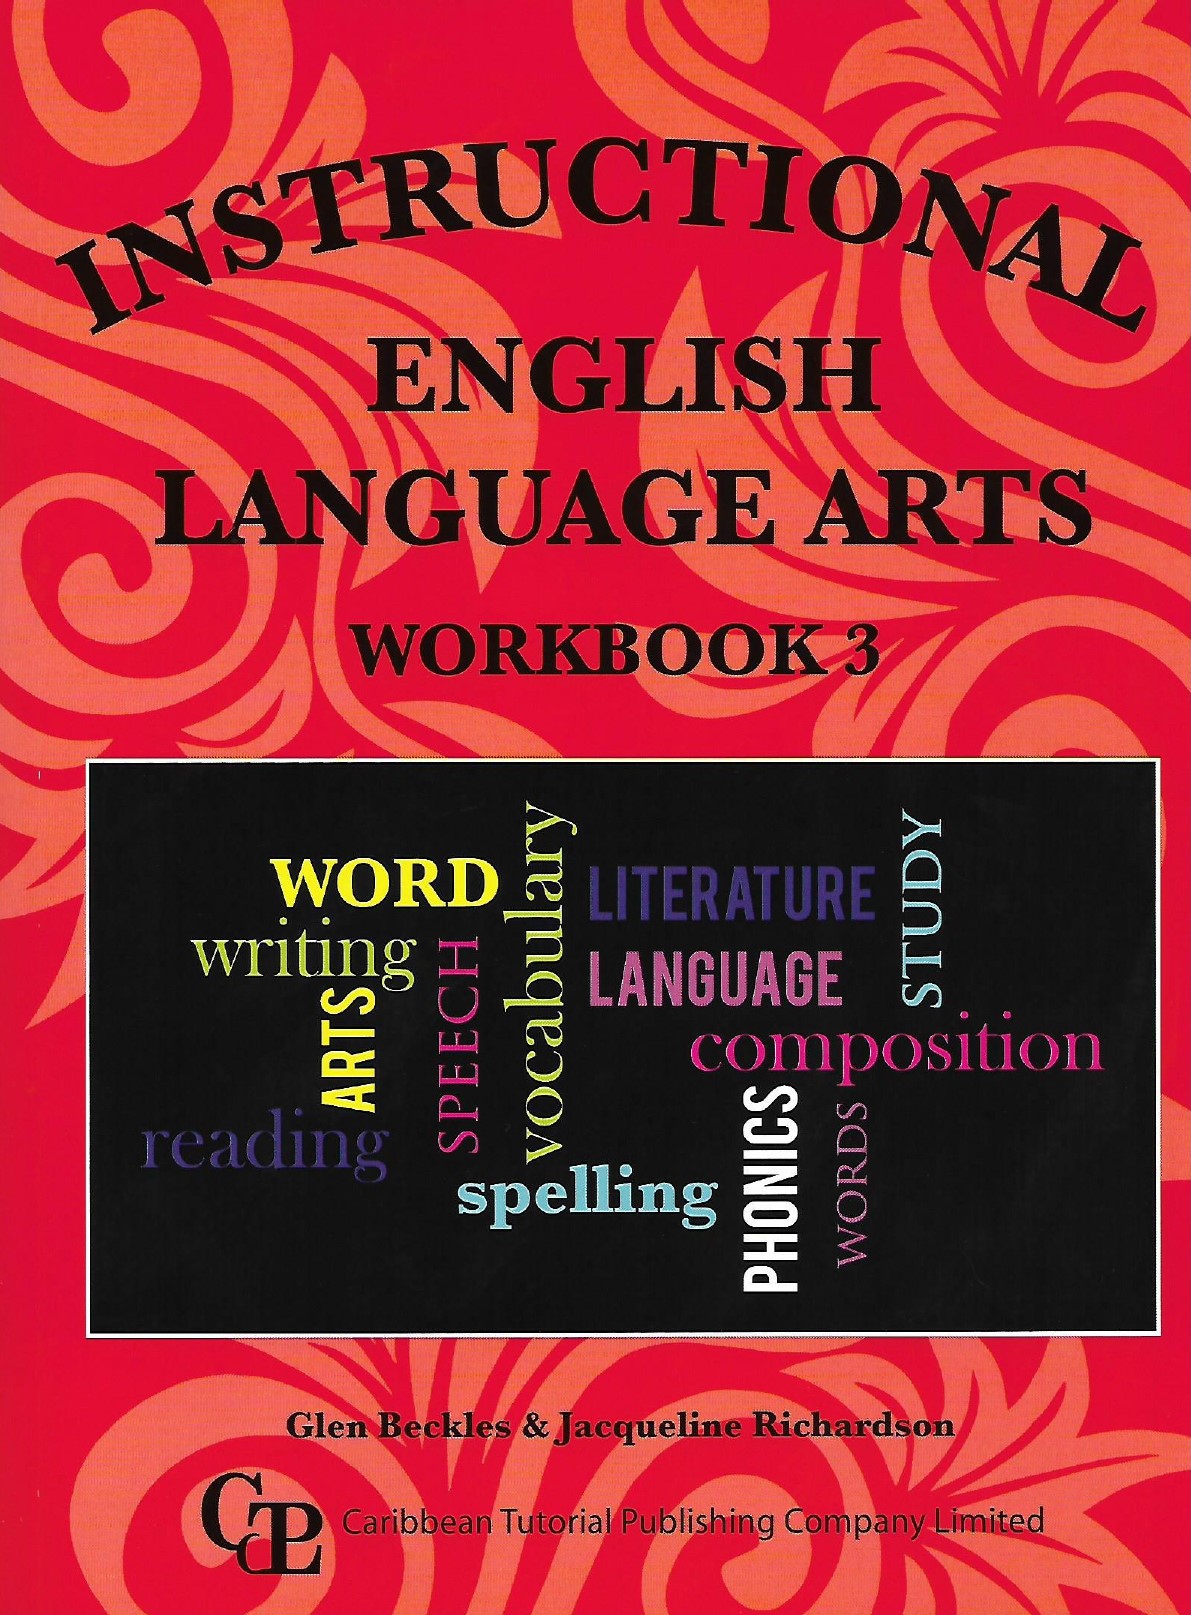 Instructional English Language Arts Workbook 3 - Caribbean Tutorial